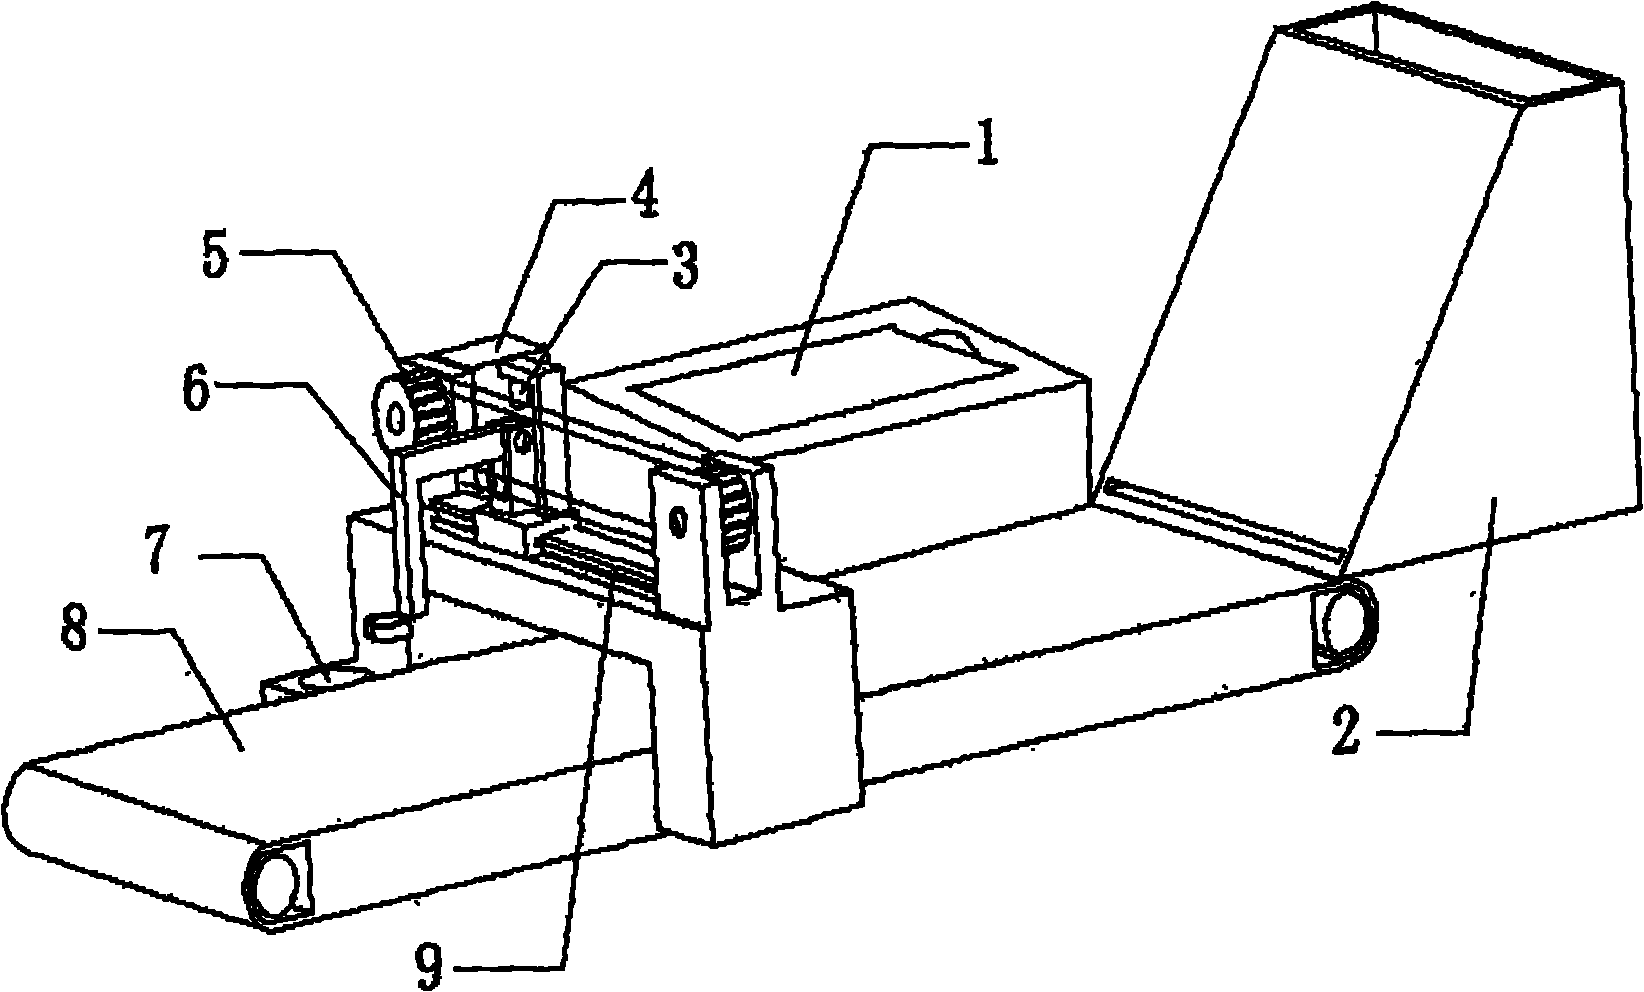 Automatic seal machine